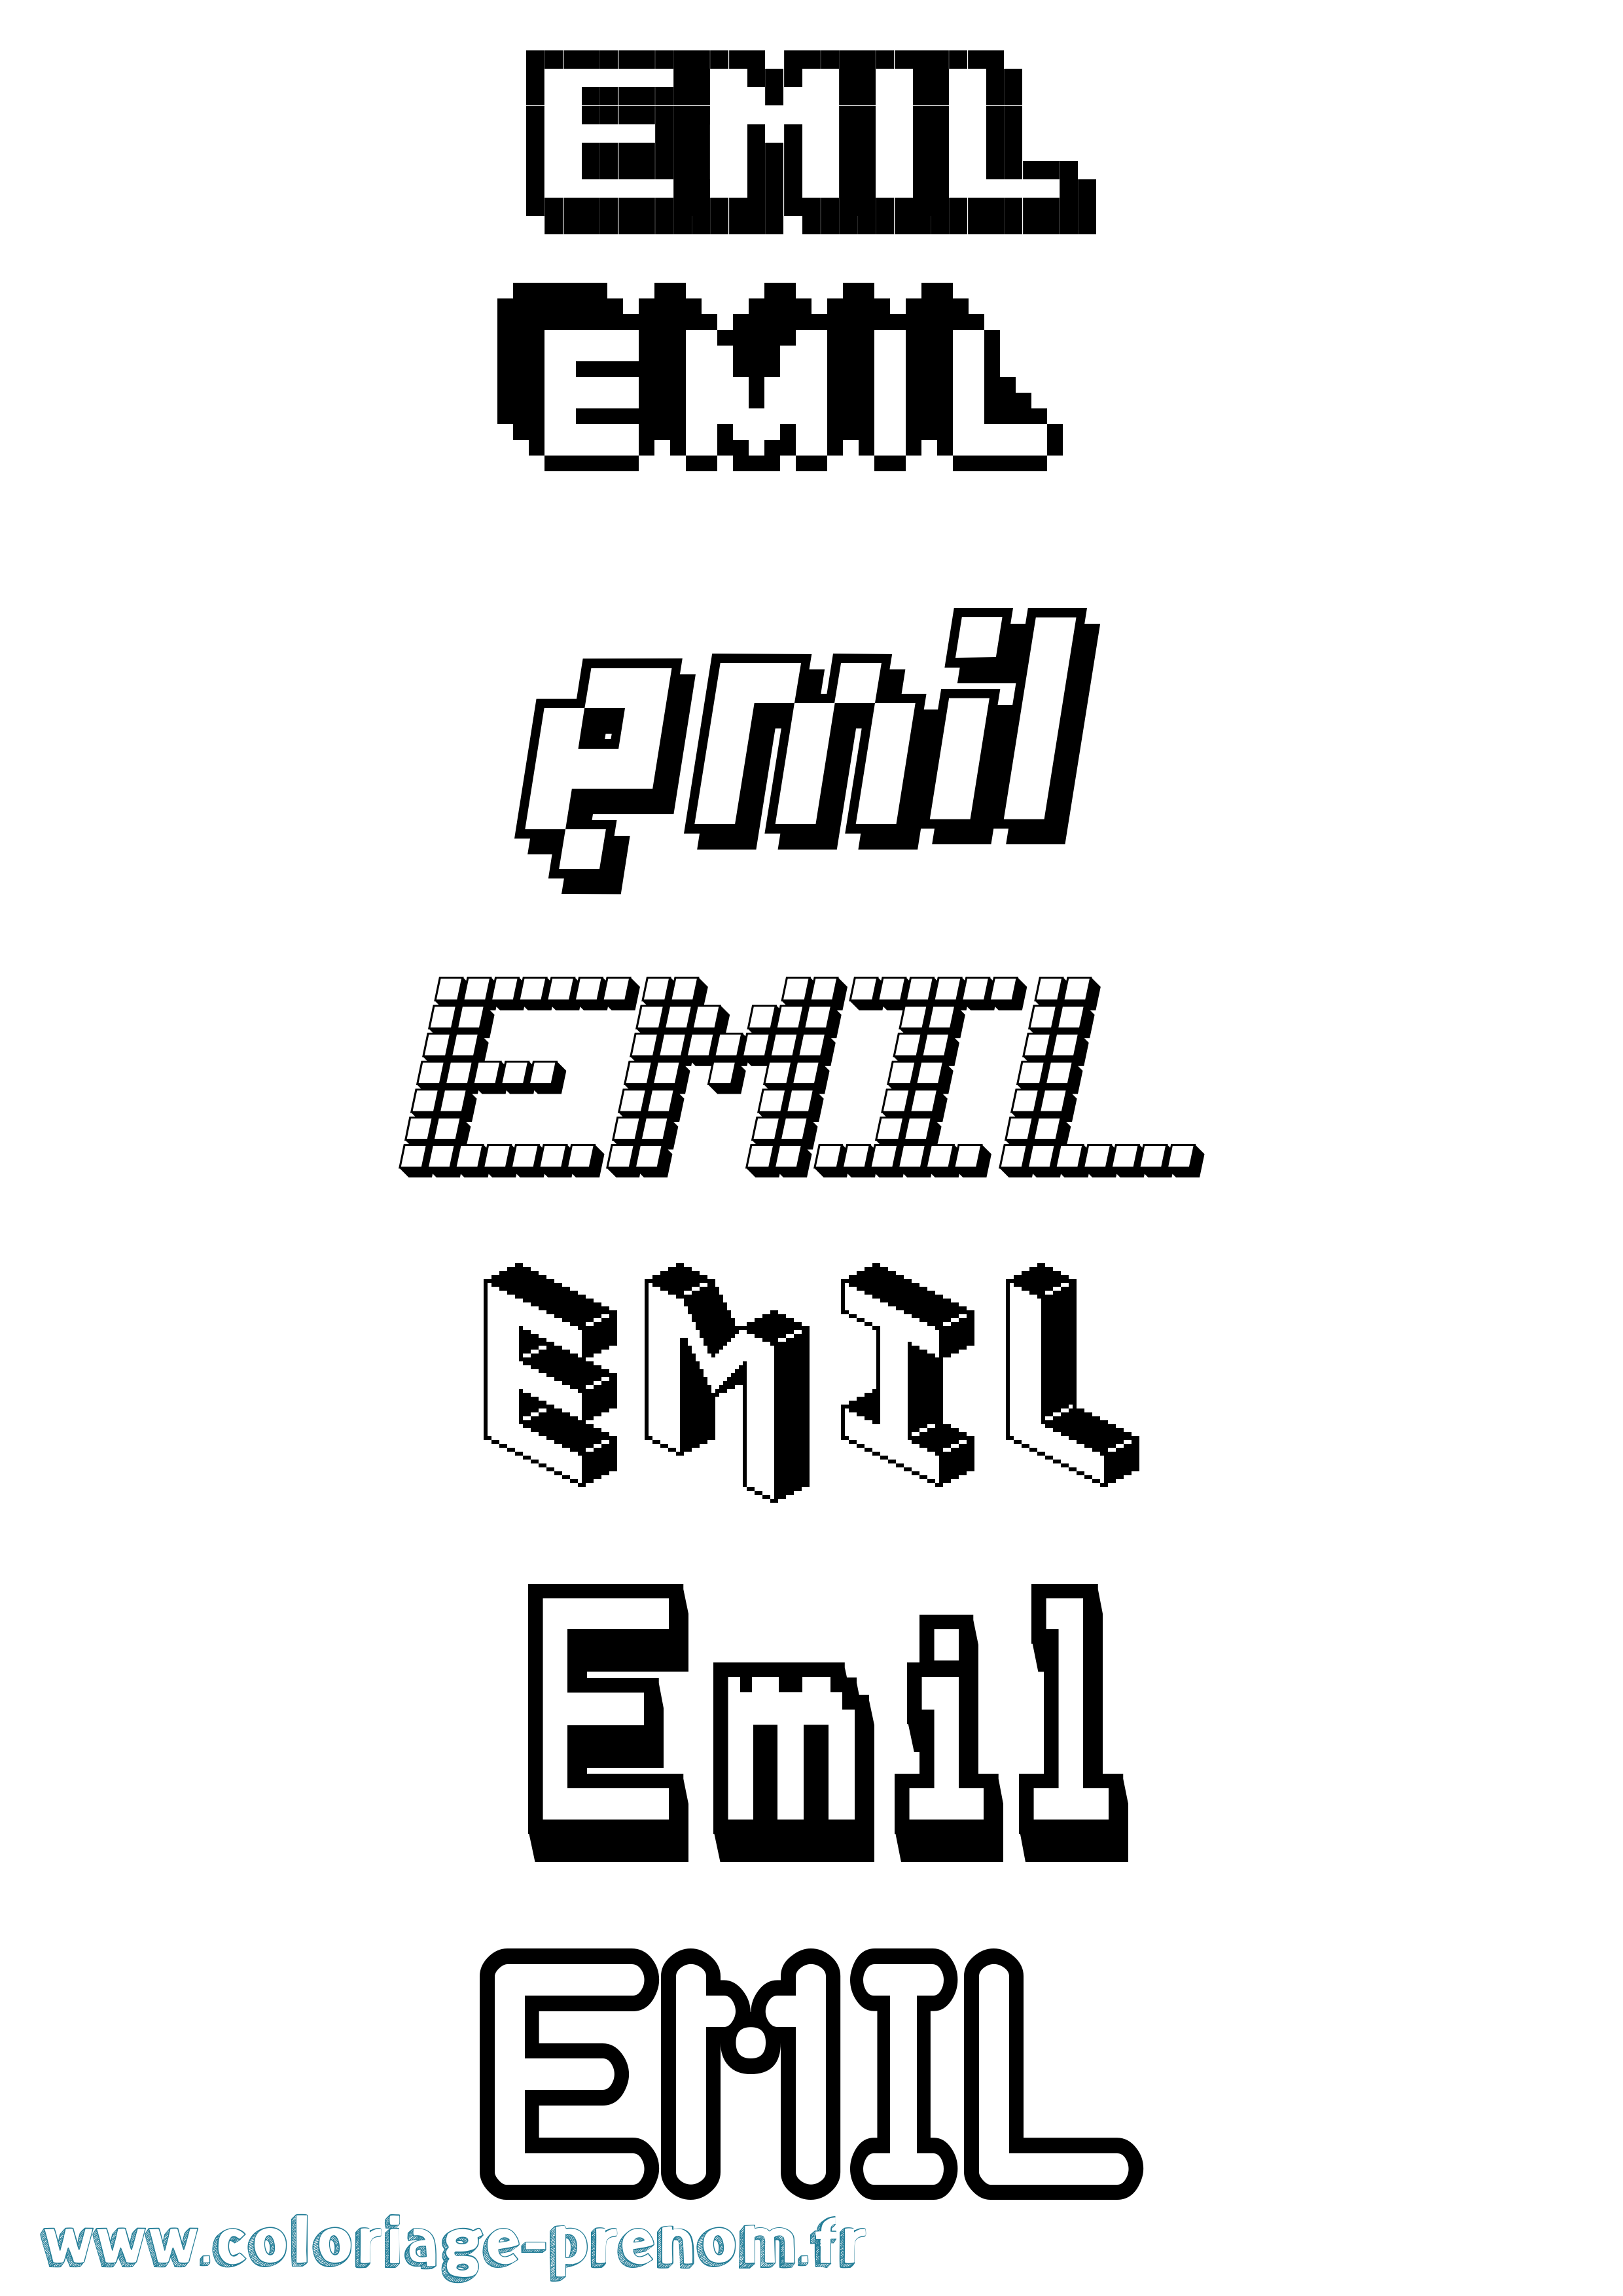 Coloriage prénom Emil